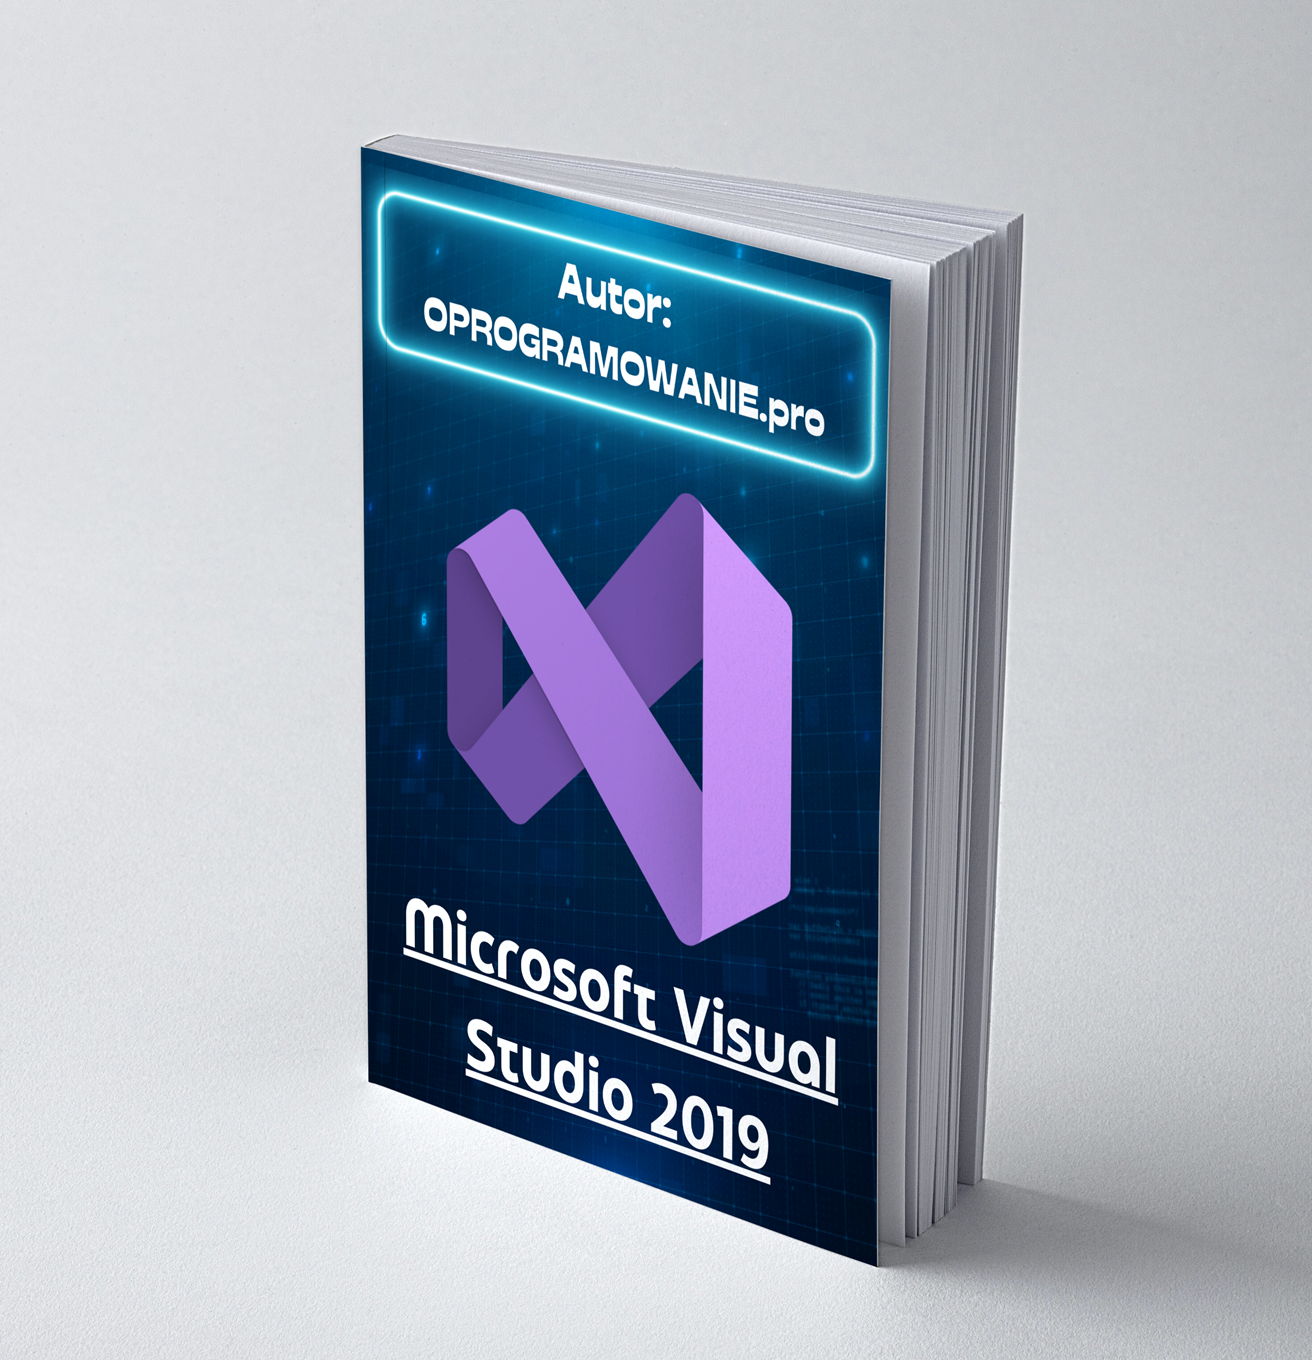 Microsoft Visual Studio 2019